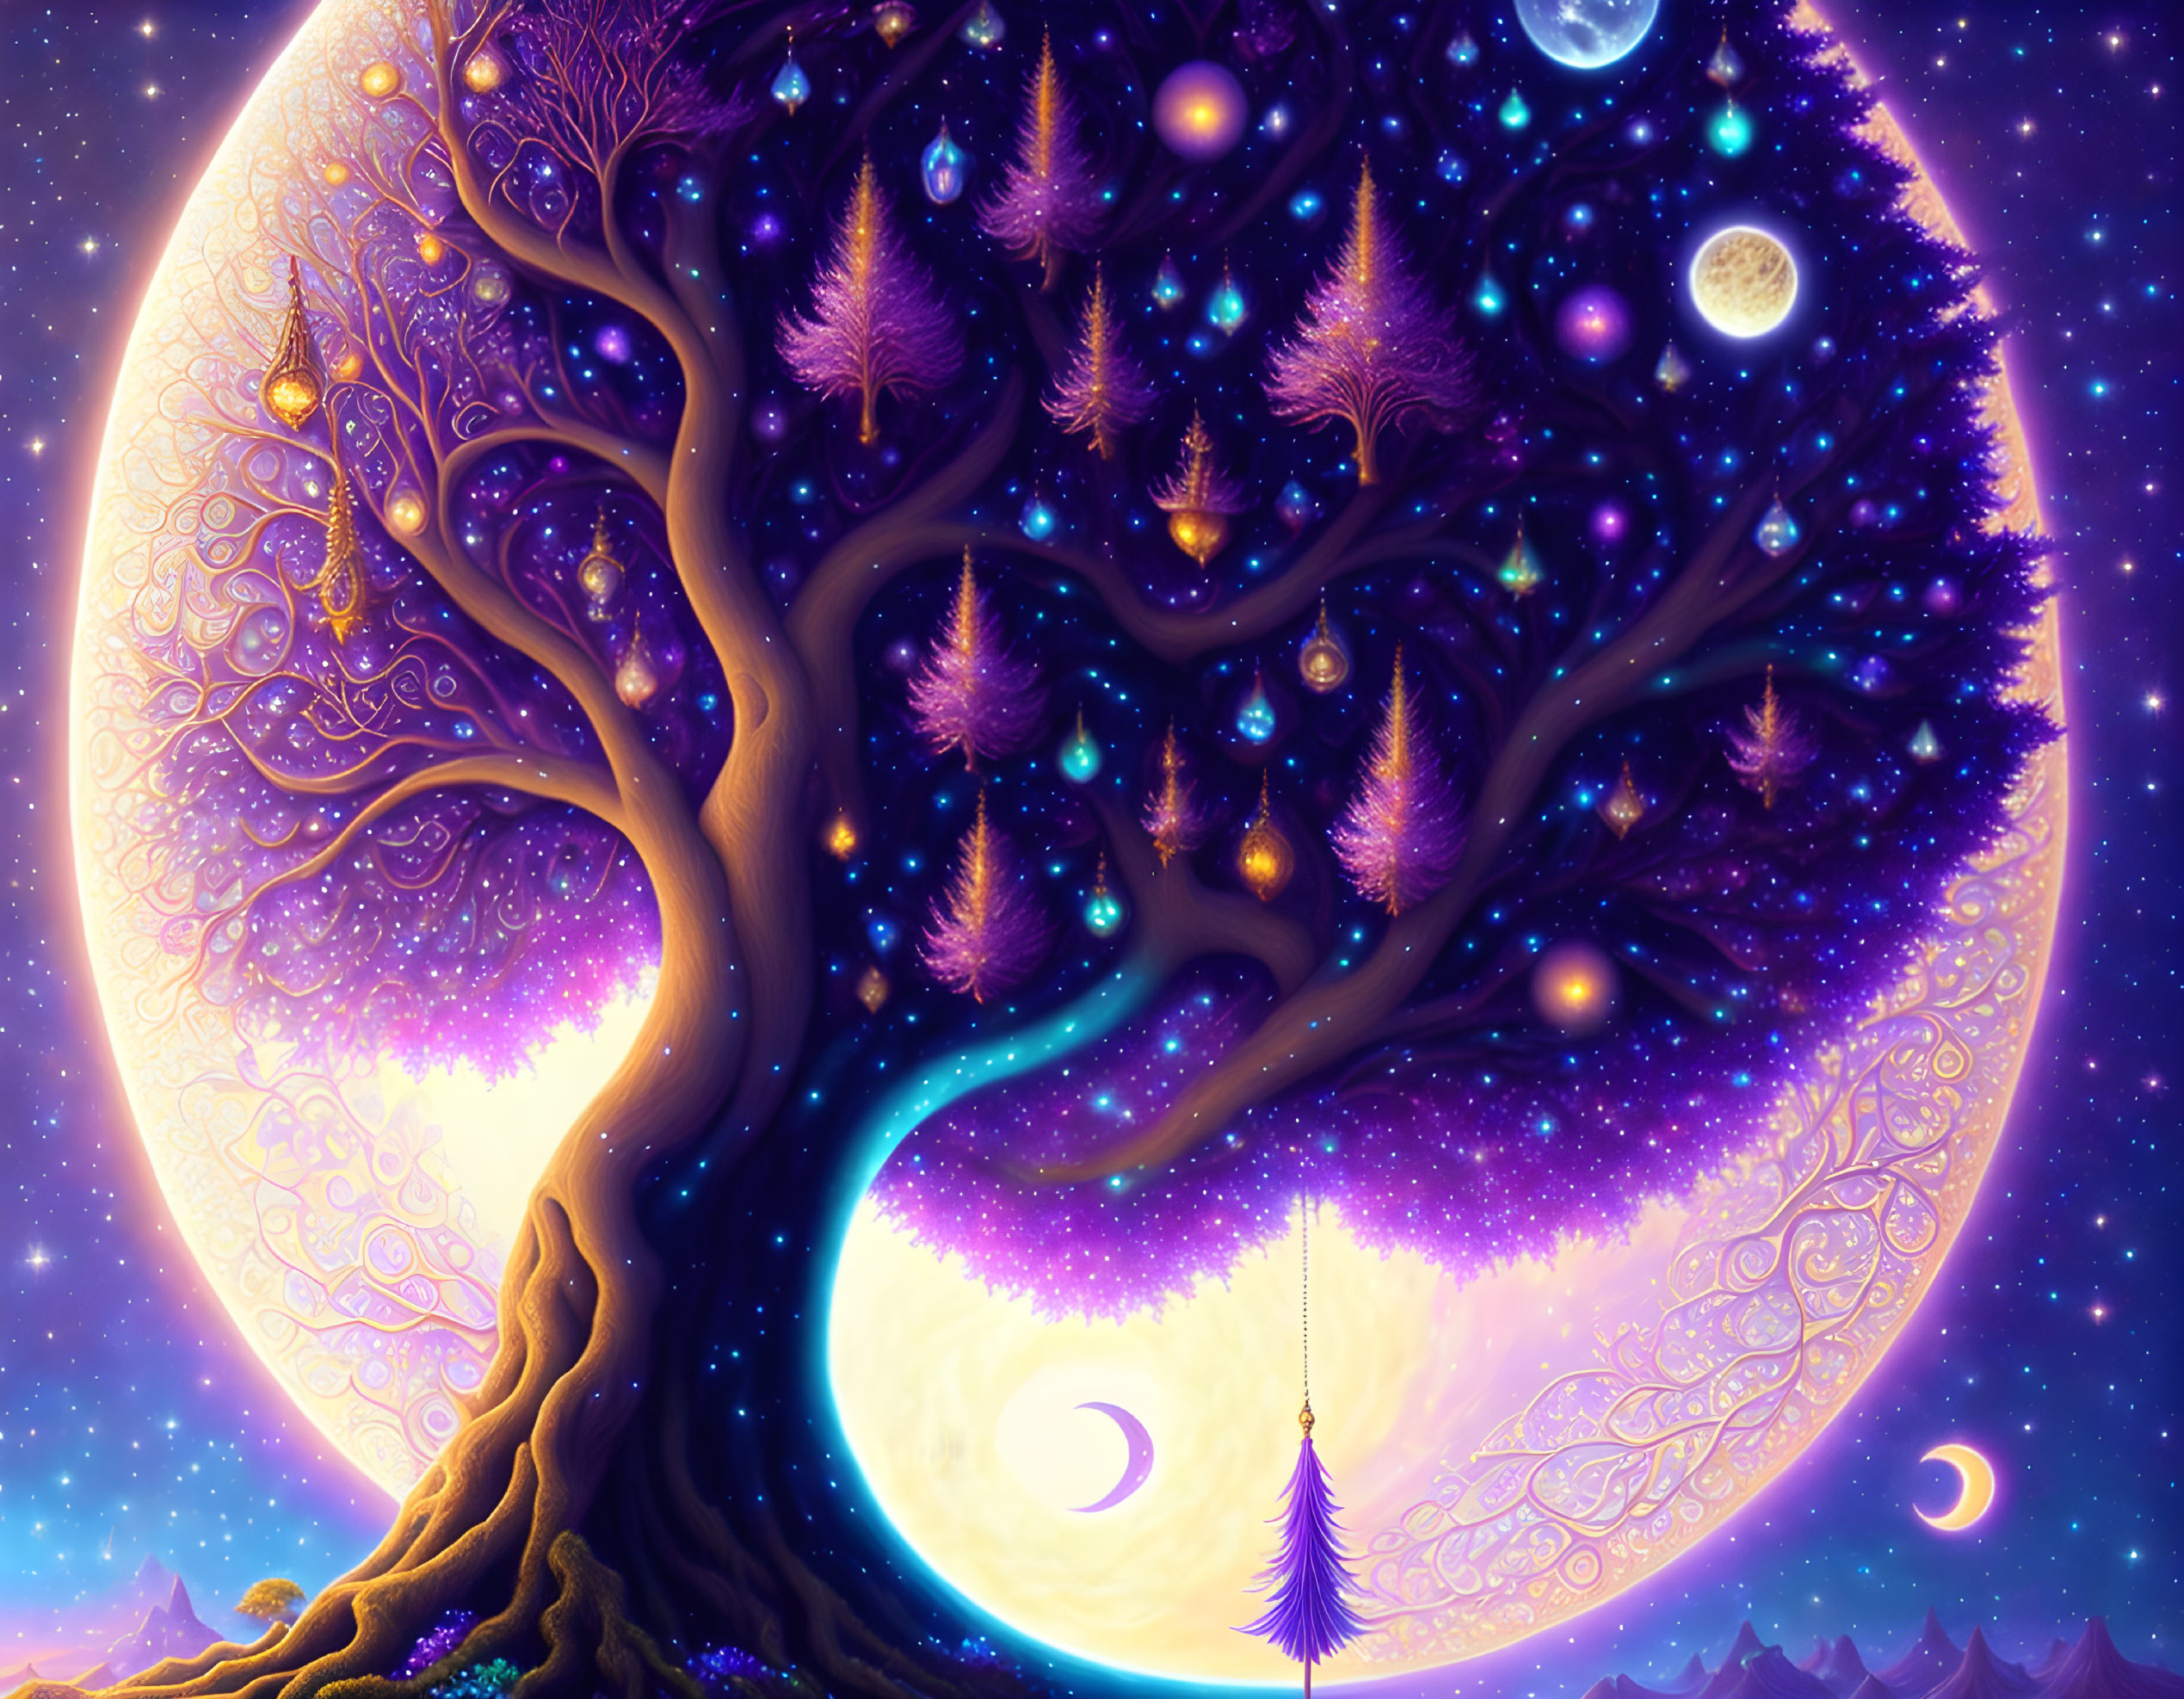 Vibrant surreal illustration: Whimsical tree under full moon